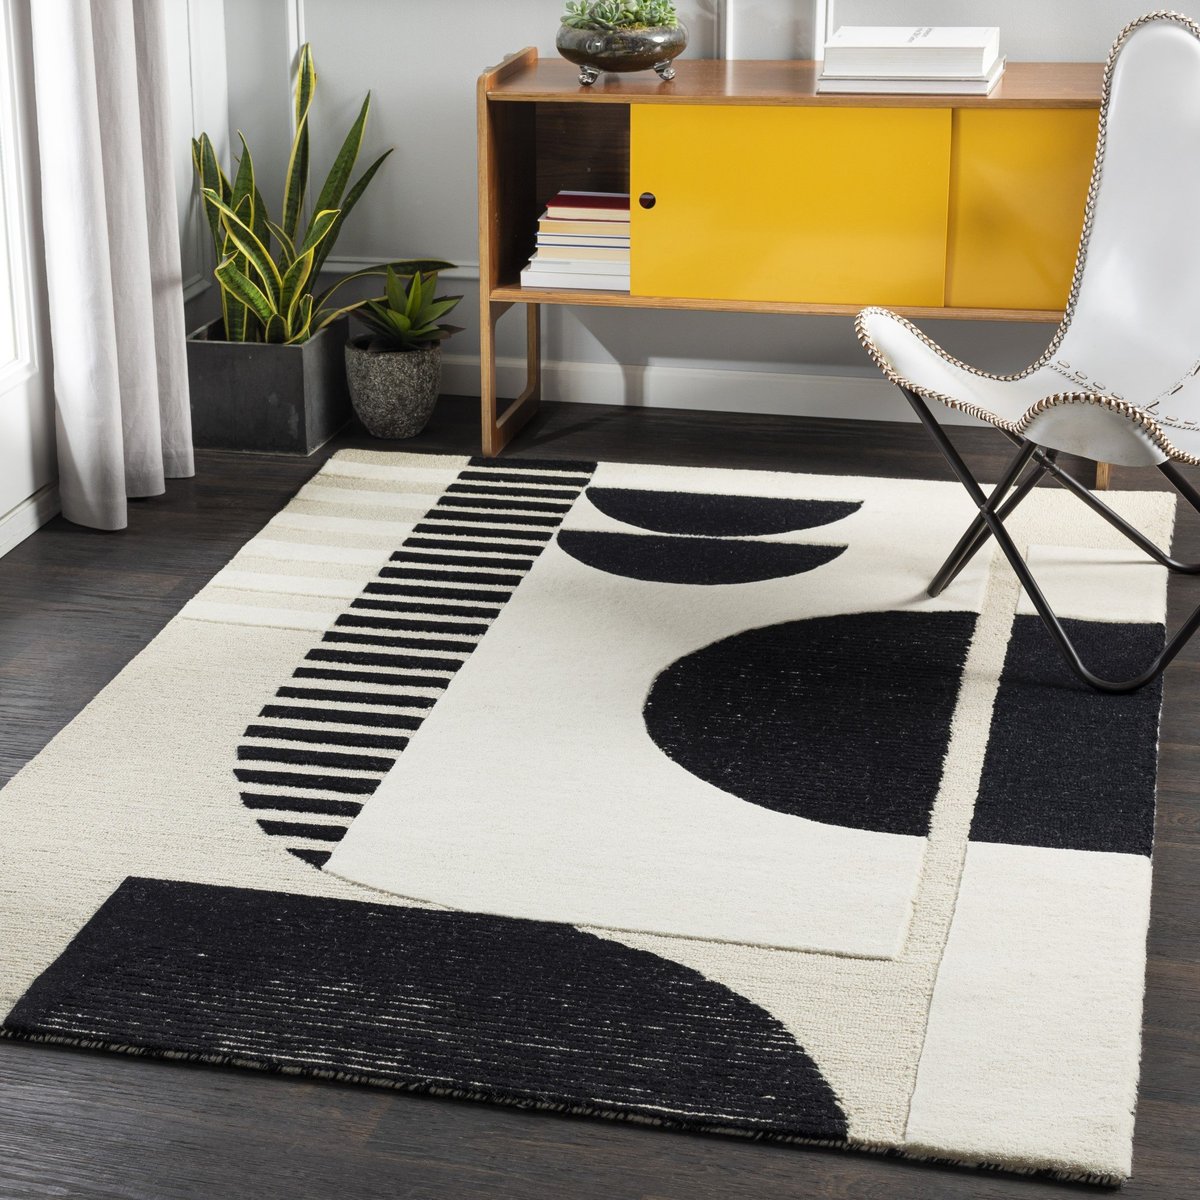 Funky Floor Decor - Black and White Living Room Design Advice